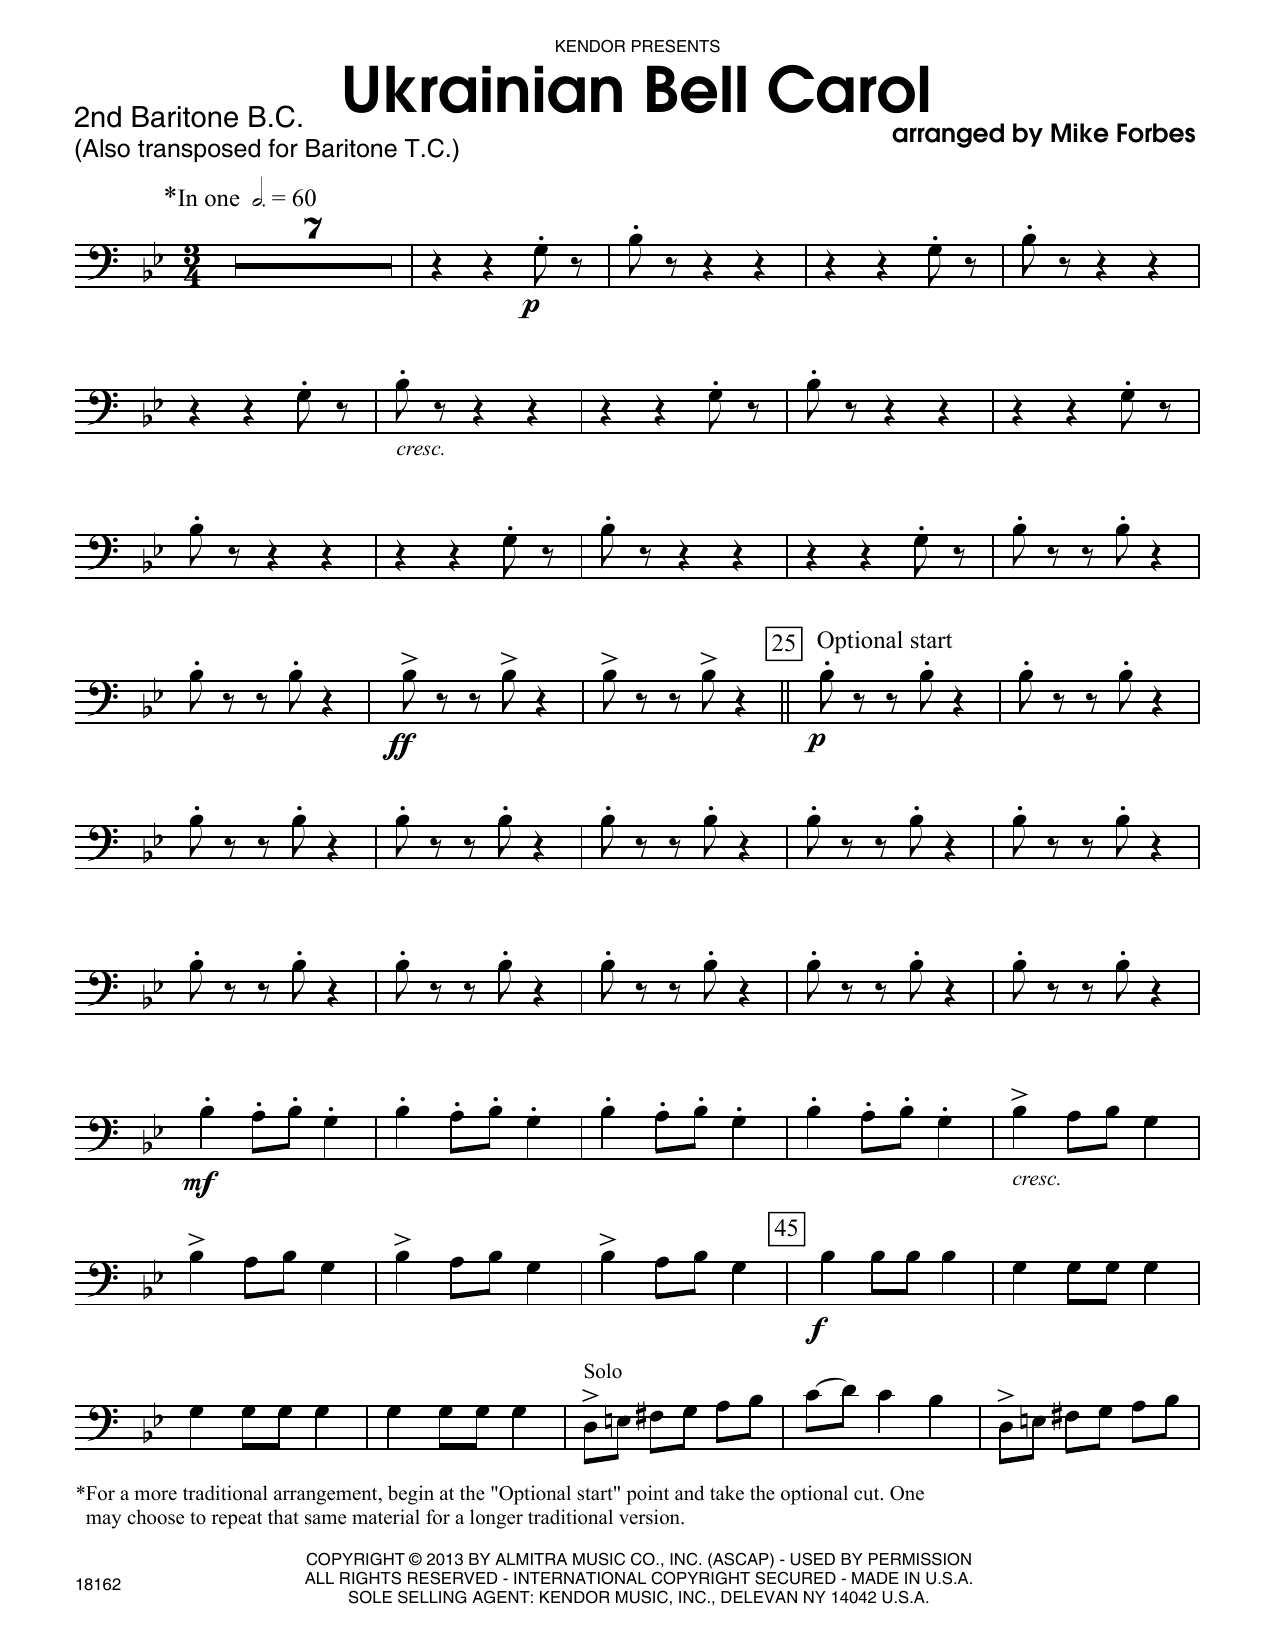 Download Michael Forbes Ukrainian Bell Carol - 2nd Baritone B.C Sheet Music